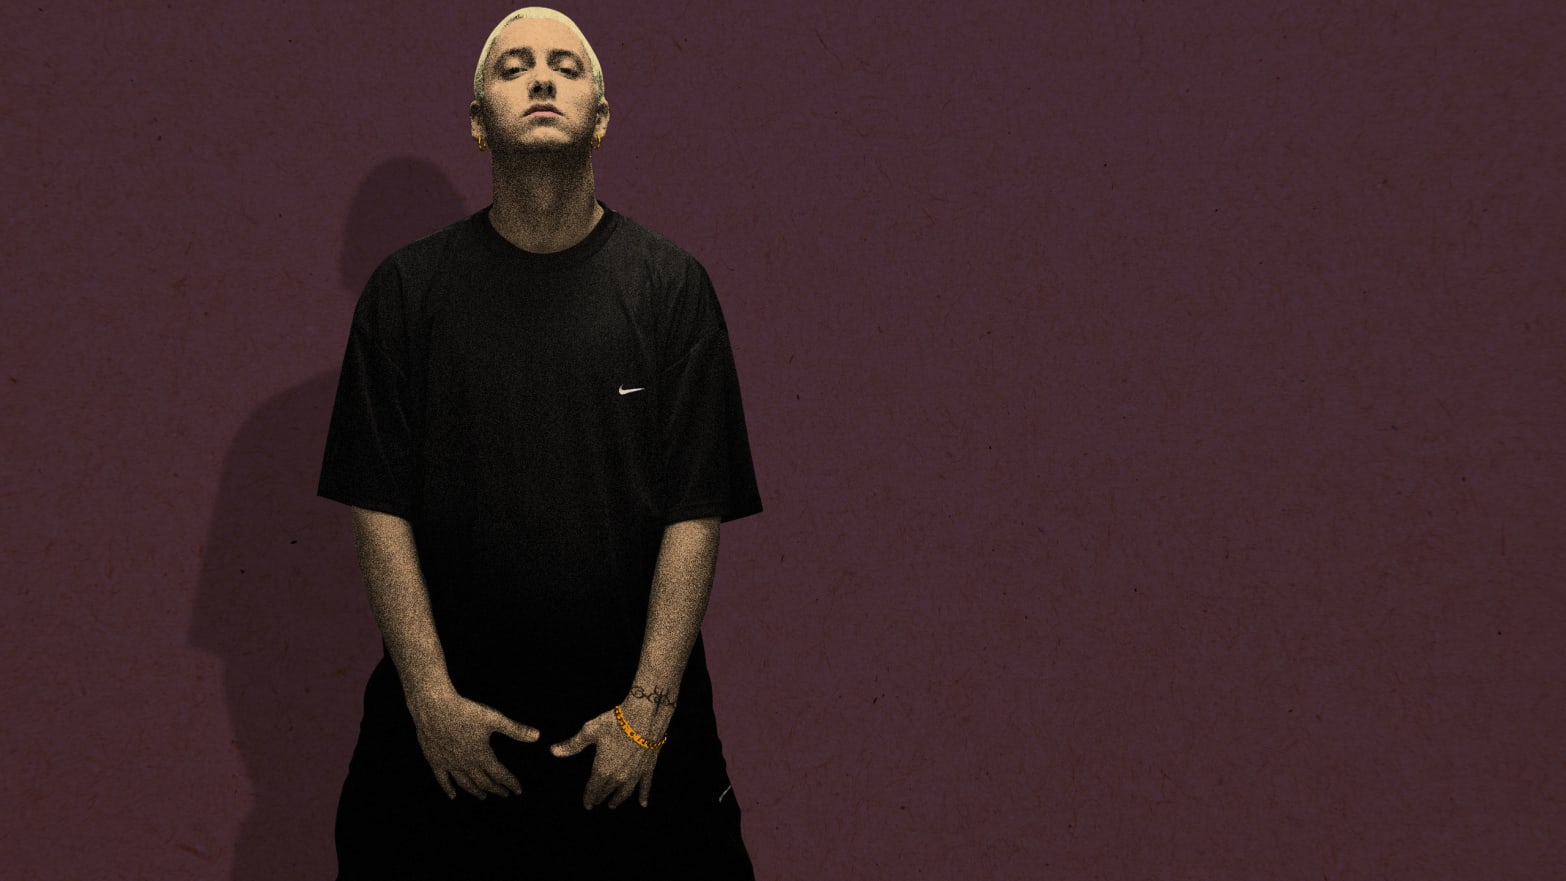 Eminem wearing a black shirt